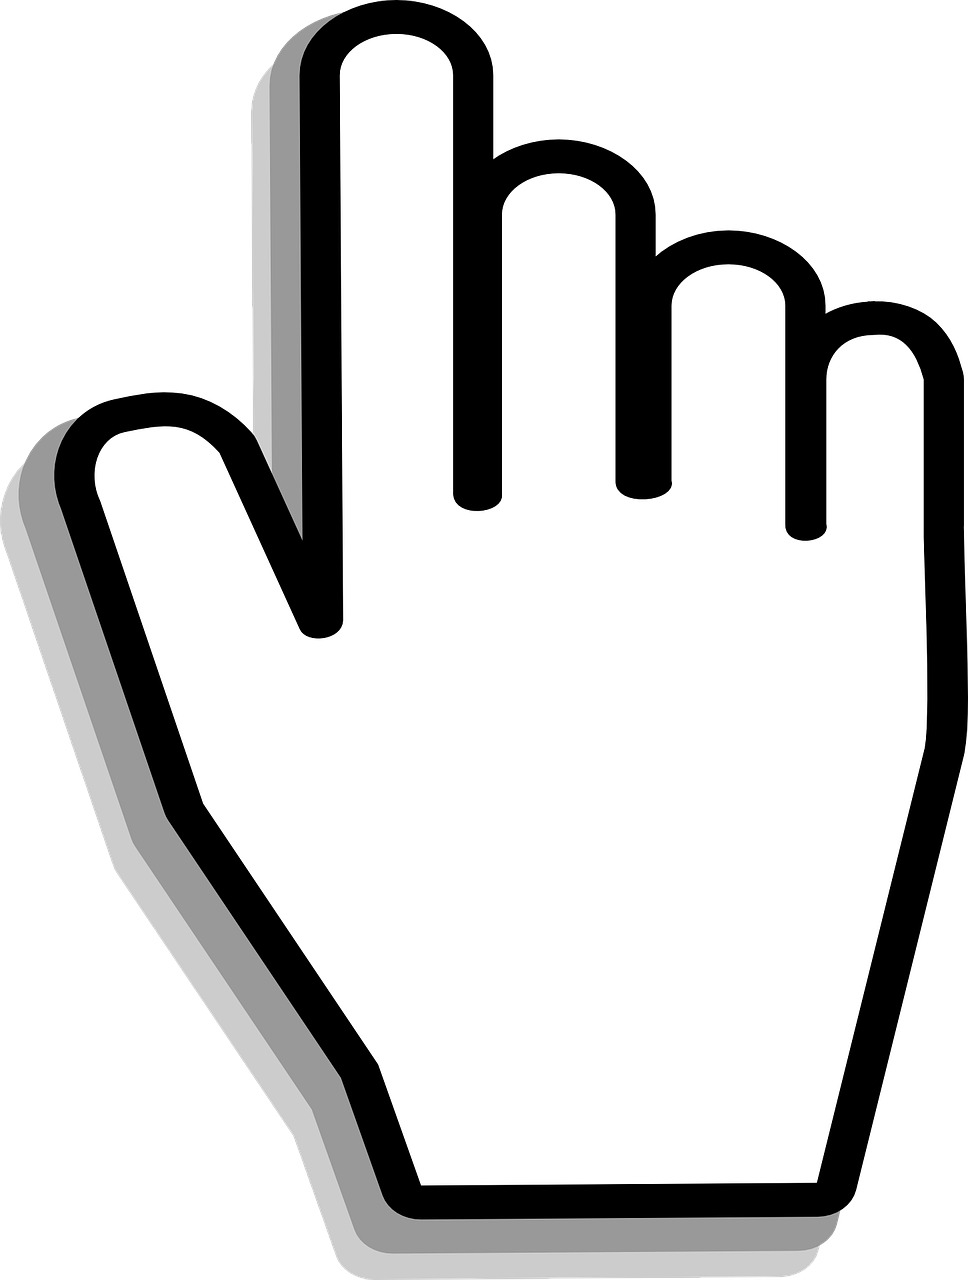 Curser shadow click symbol. Finger clipart large hand